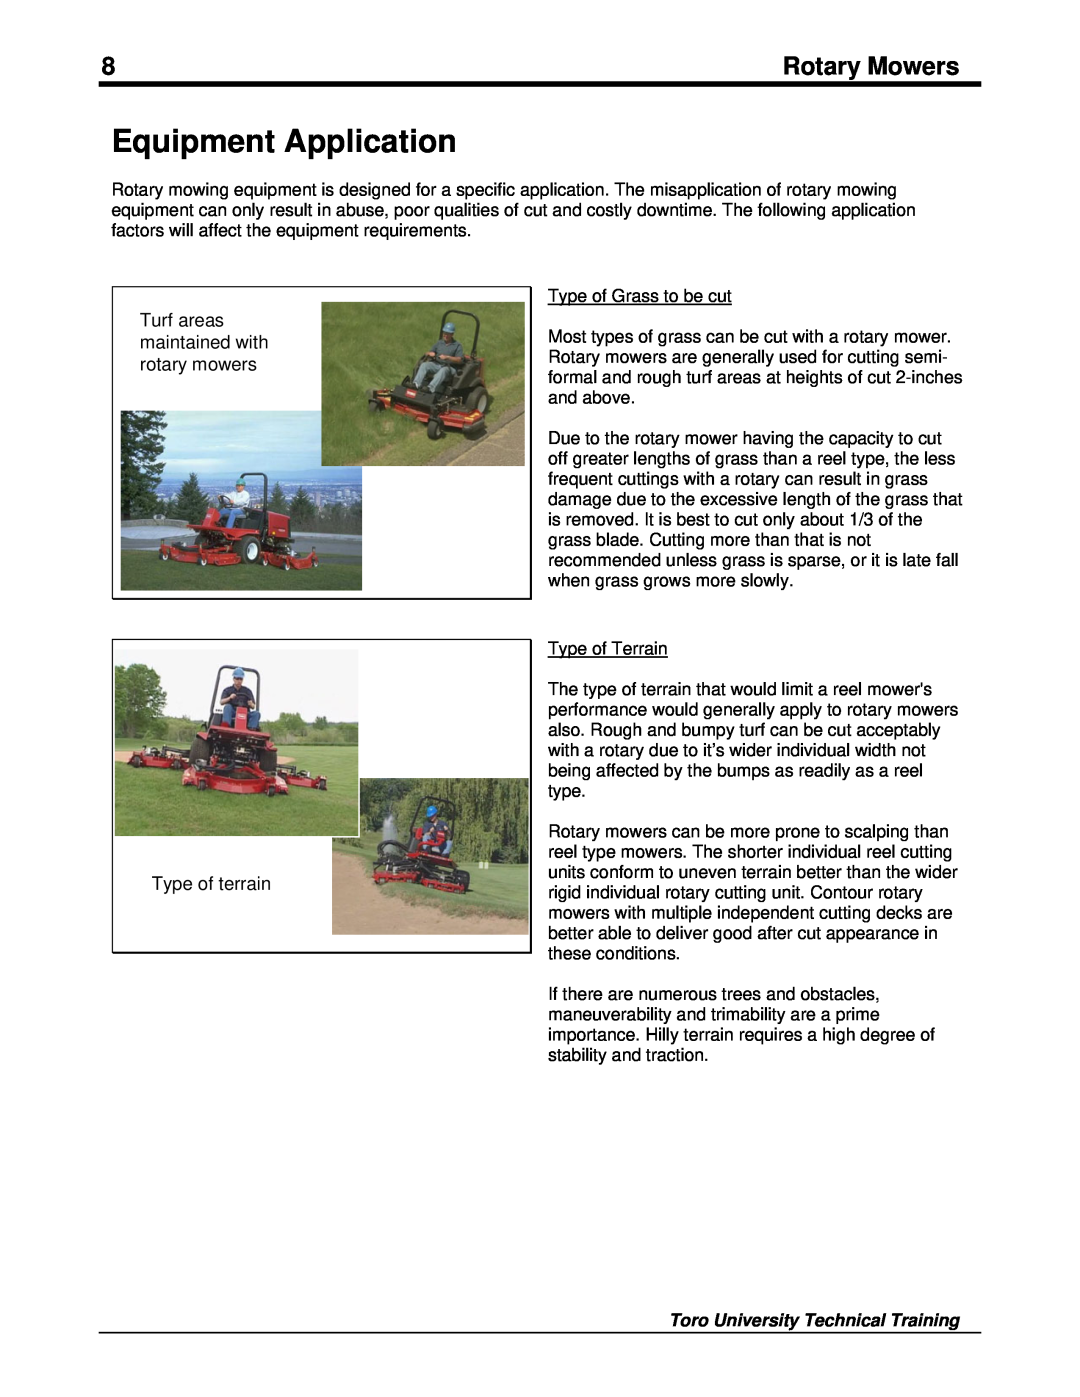 Toro 09167SL manual Equipment Application, Rotary Mowers, Turf areas maintained with rotary mowers, Type of terrain 